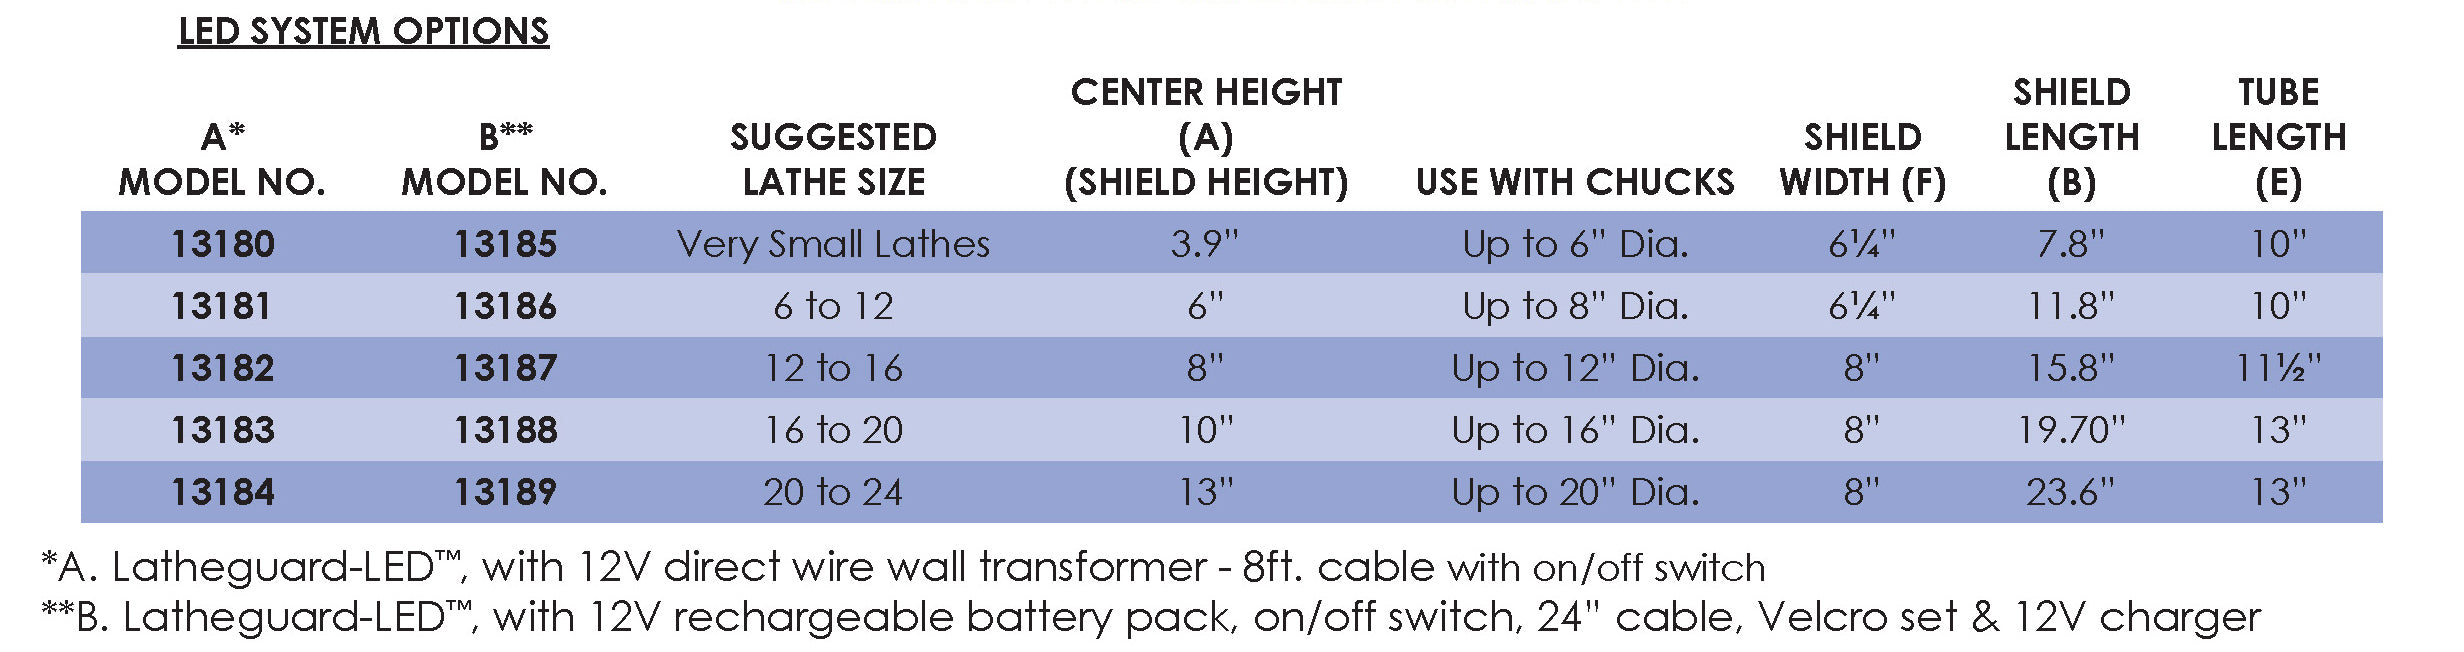 Latheguard-LED - Medium/Large - Direct Wire Wall Transformer